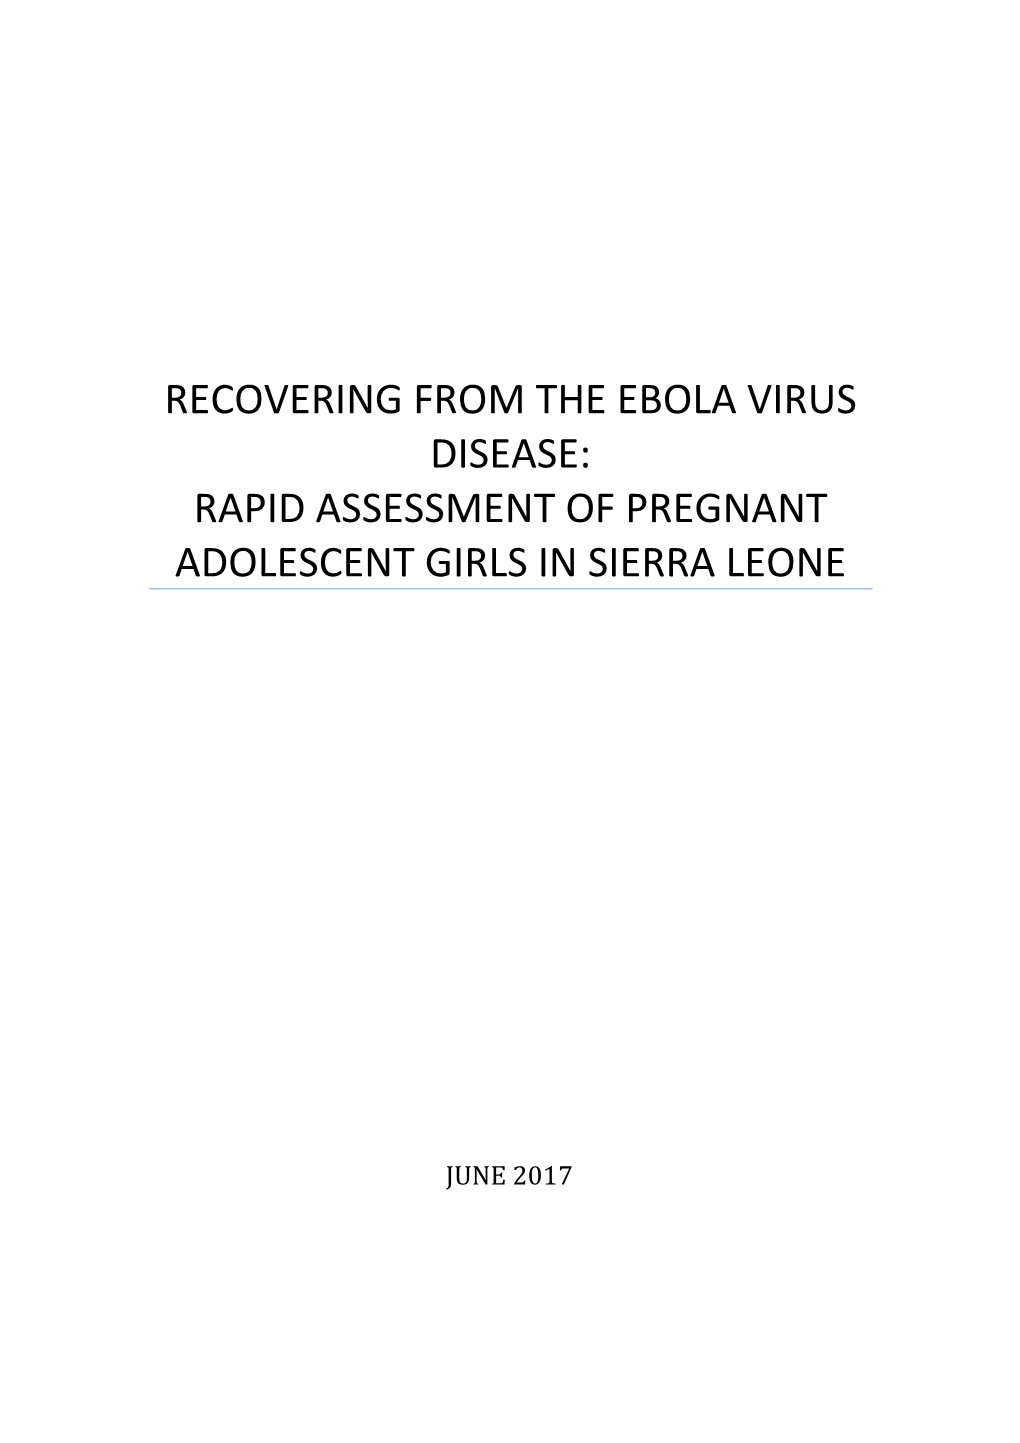 Rapid Assessment of Pregnant Adolescent Girls in Sierra Leone